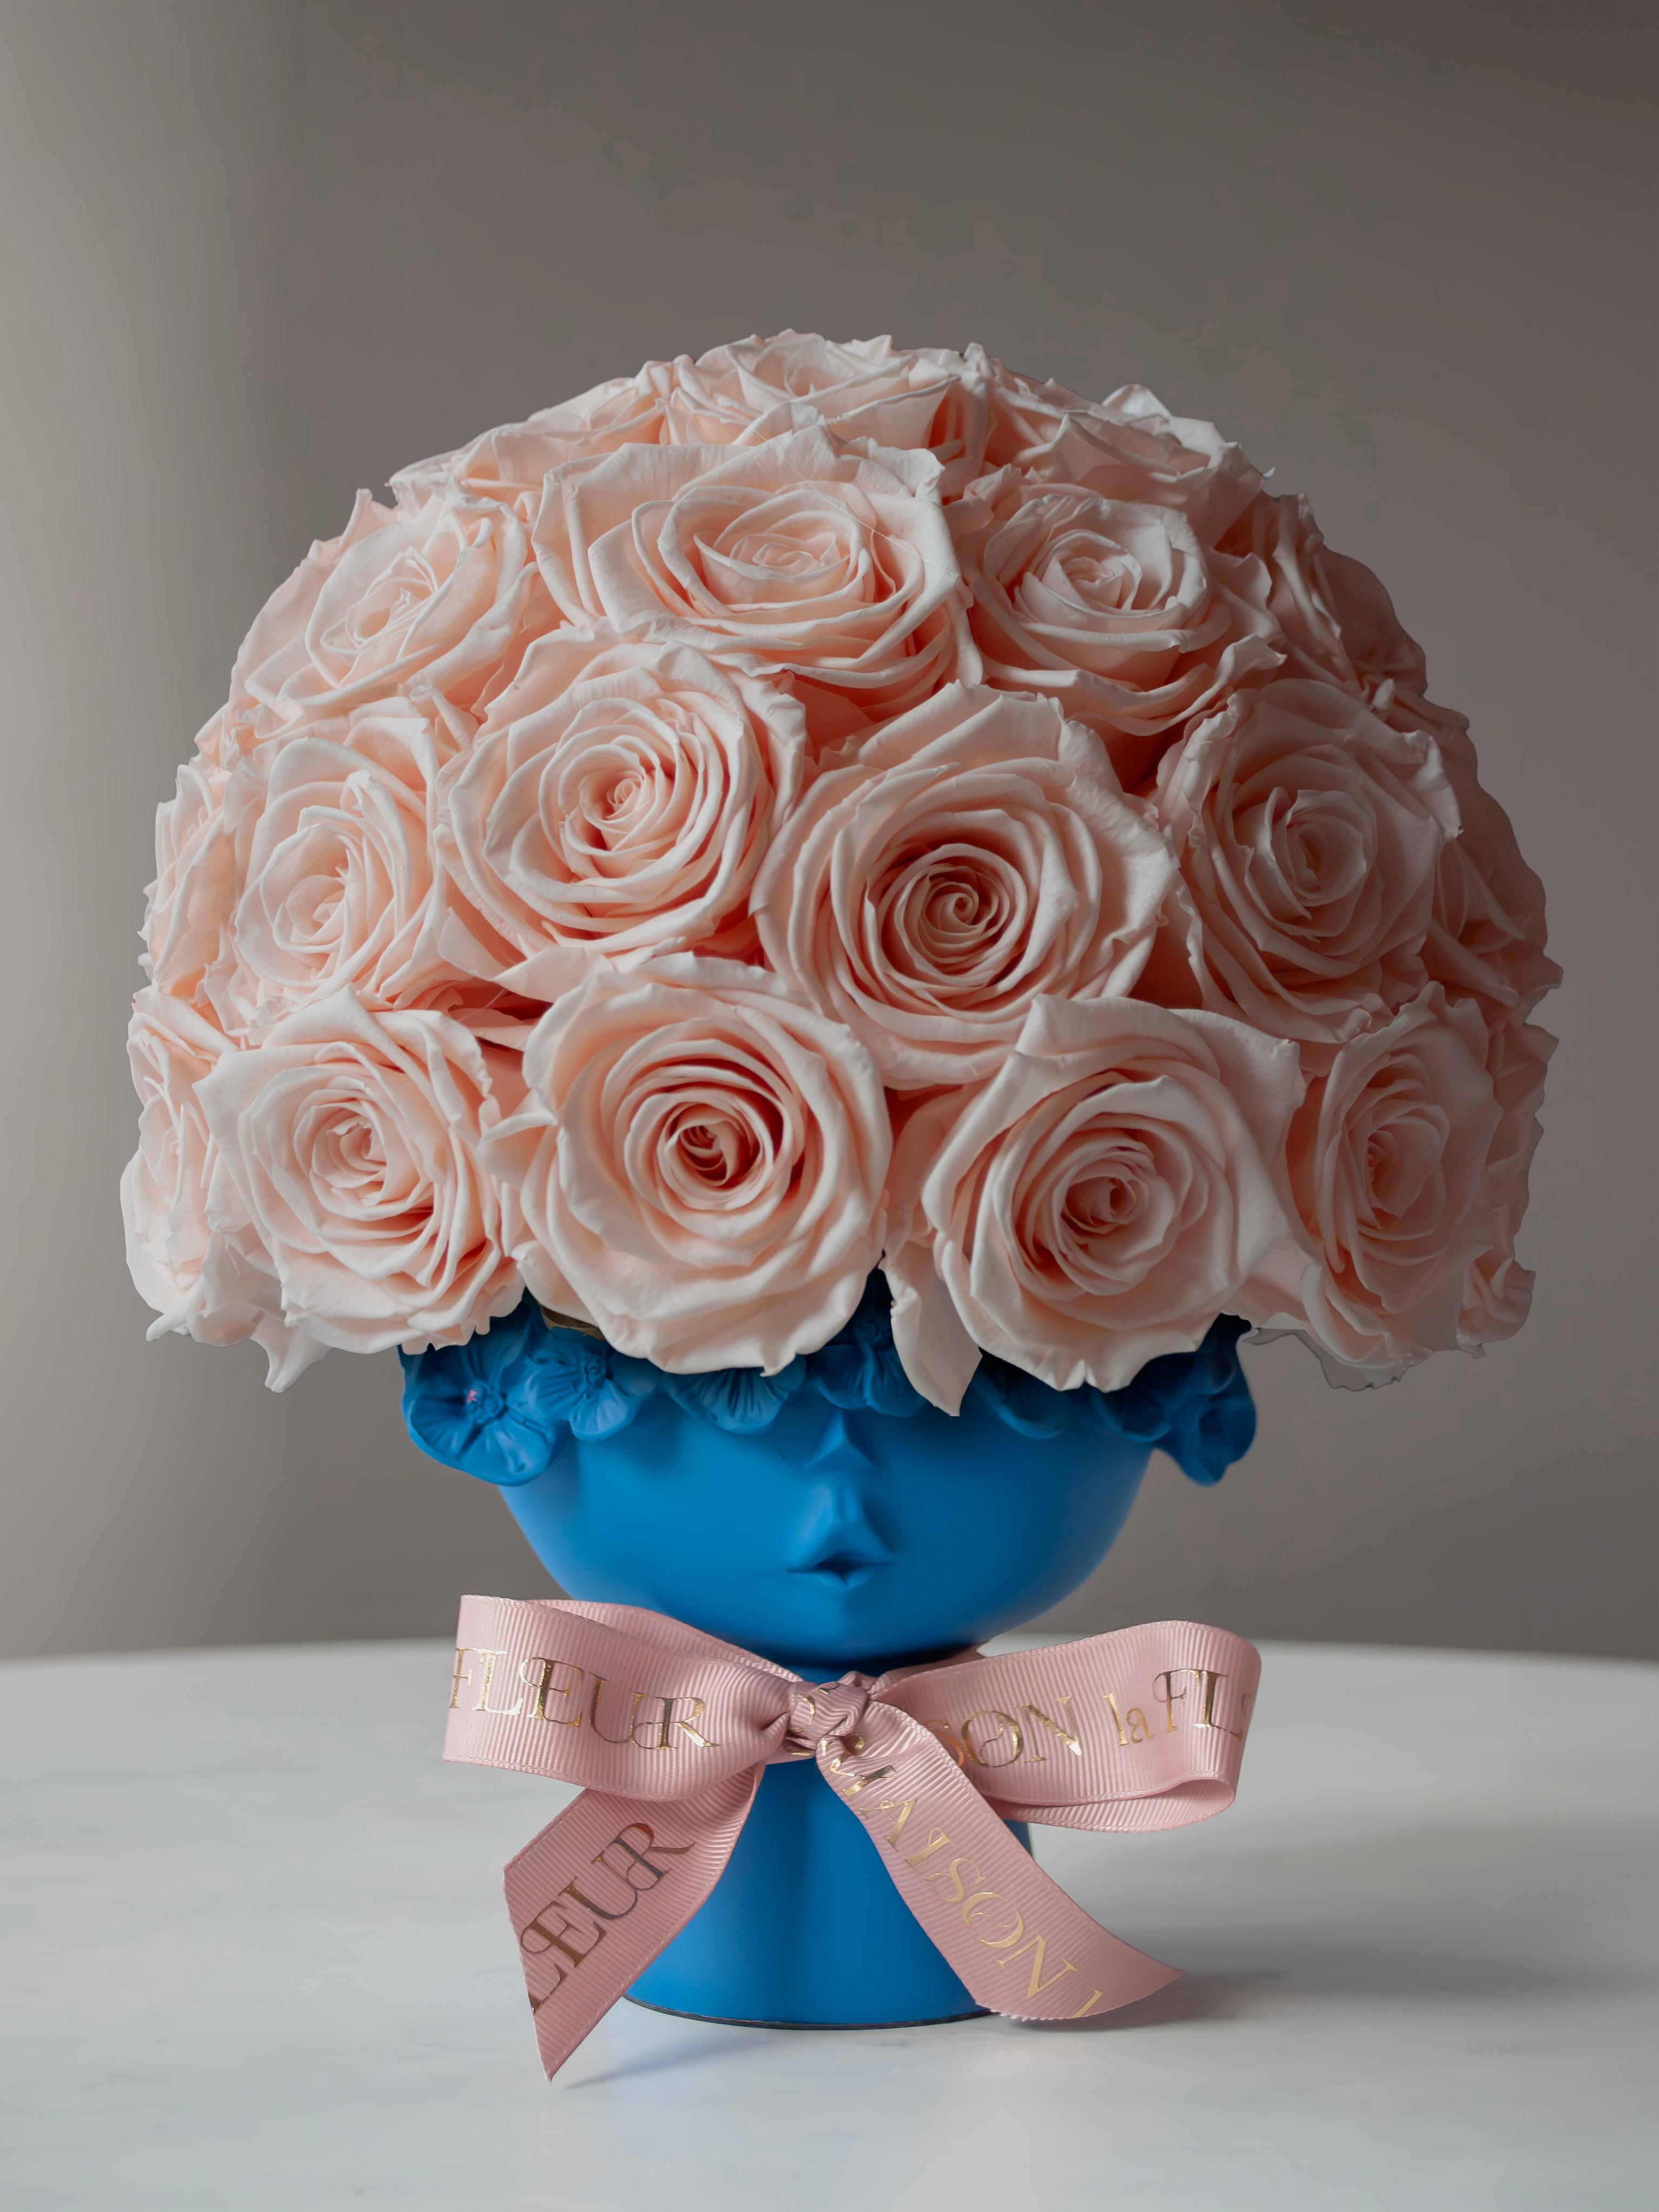 Lady in Bloom - Beautiful Premium Preserved Roses